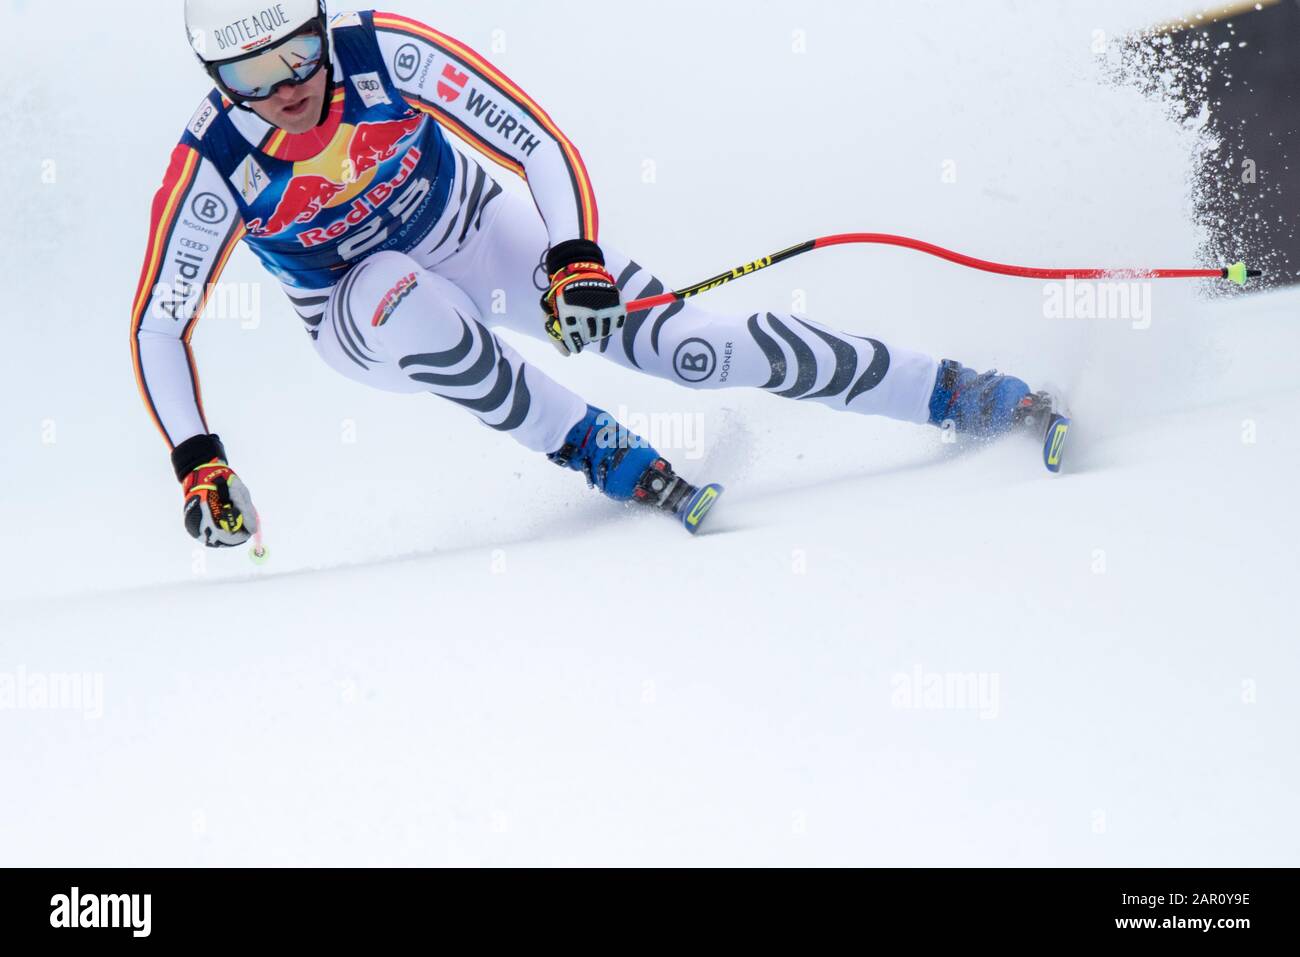 Romed Baumann of Germany at the Ski Alpin: 80. Hahnenkamm Race 2020 - Audi FIS Alpine Ski World Cup - Men's Downhill at the Streif on January 25, 2020 in Kitzbuehel, AUSTRIA. Credit: European Sports Photographic Agency/Alamy Live News Stock Photo